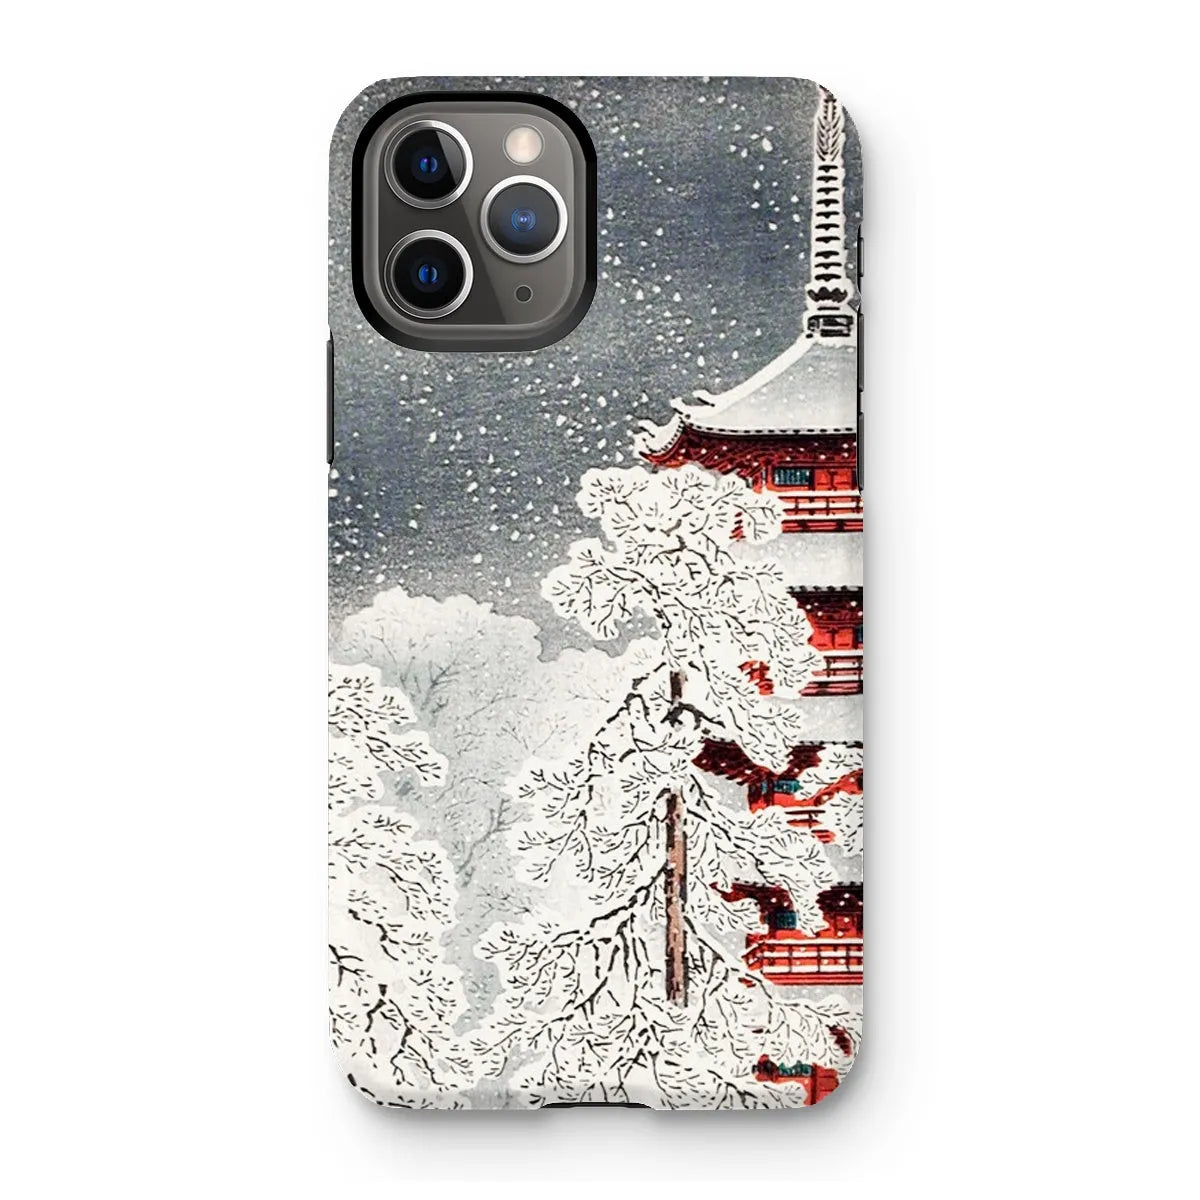 Snow At Asakusa - Shin-hanga Phone Case - Takahashi Shōtei - Iphone 11 Pro / Matte - Mobile Phone Cases - Aesthetic Art